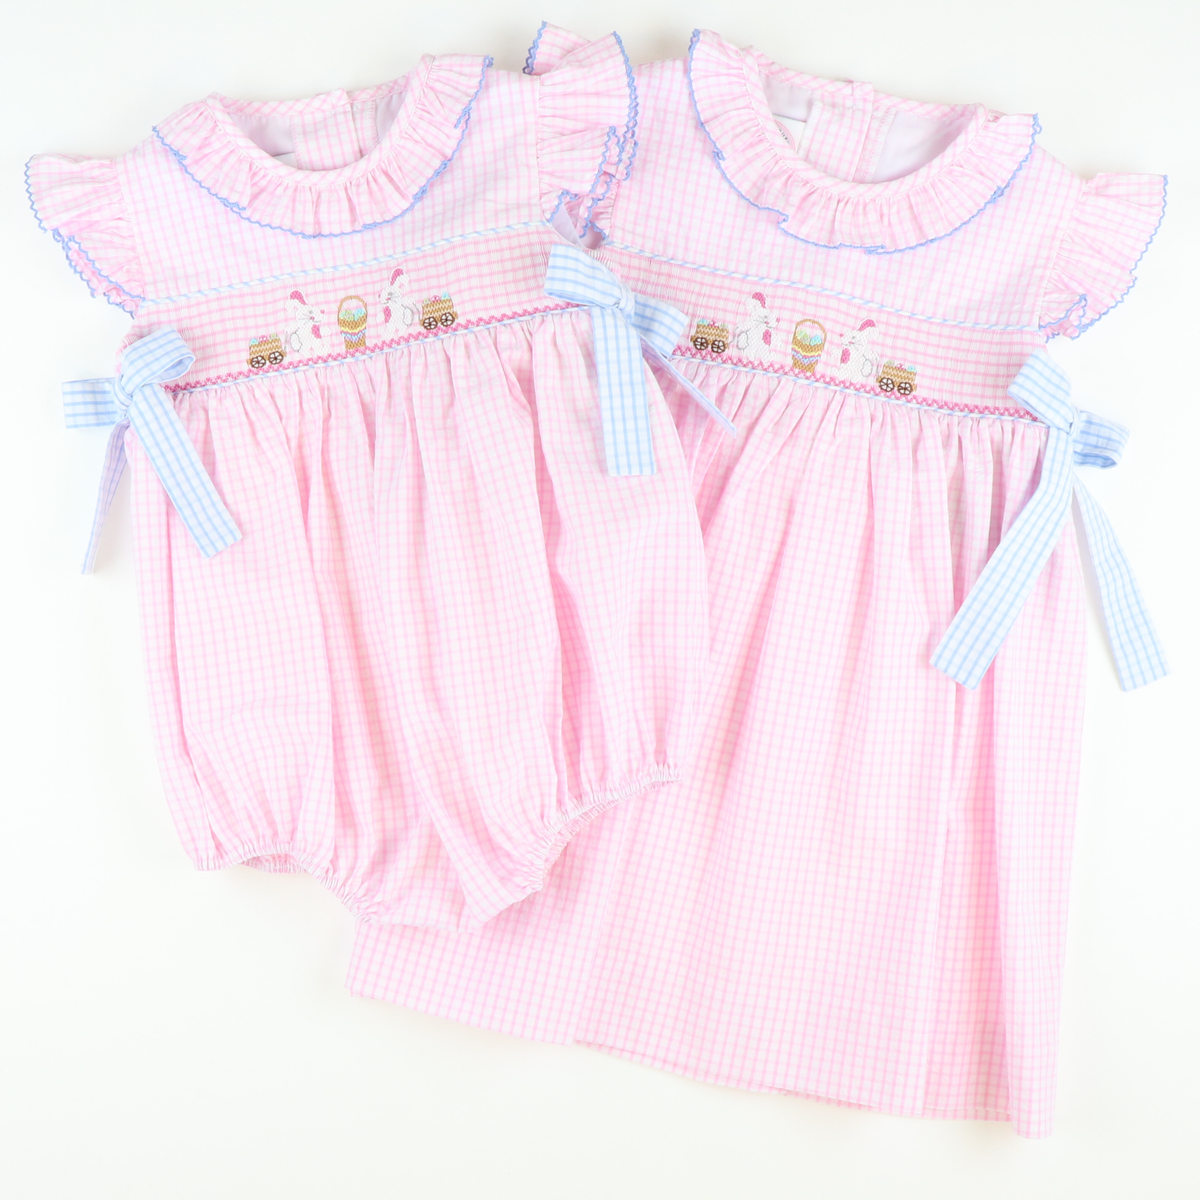 Smocked Bunnies & Baskets Dress - Light Pink Seersucker Windowpane